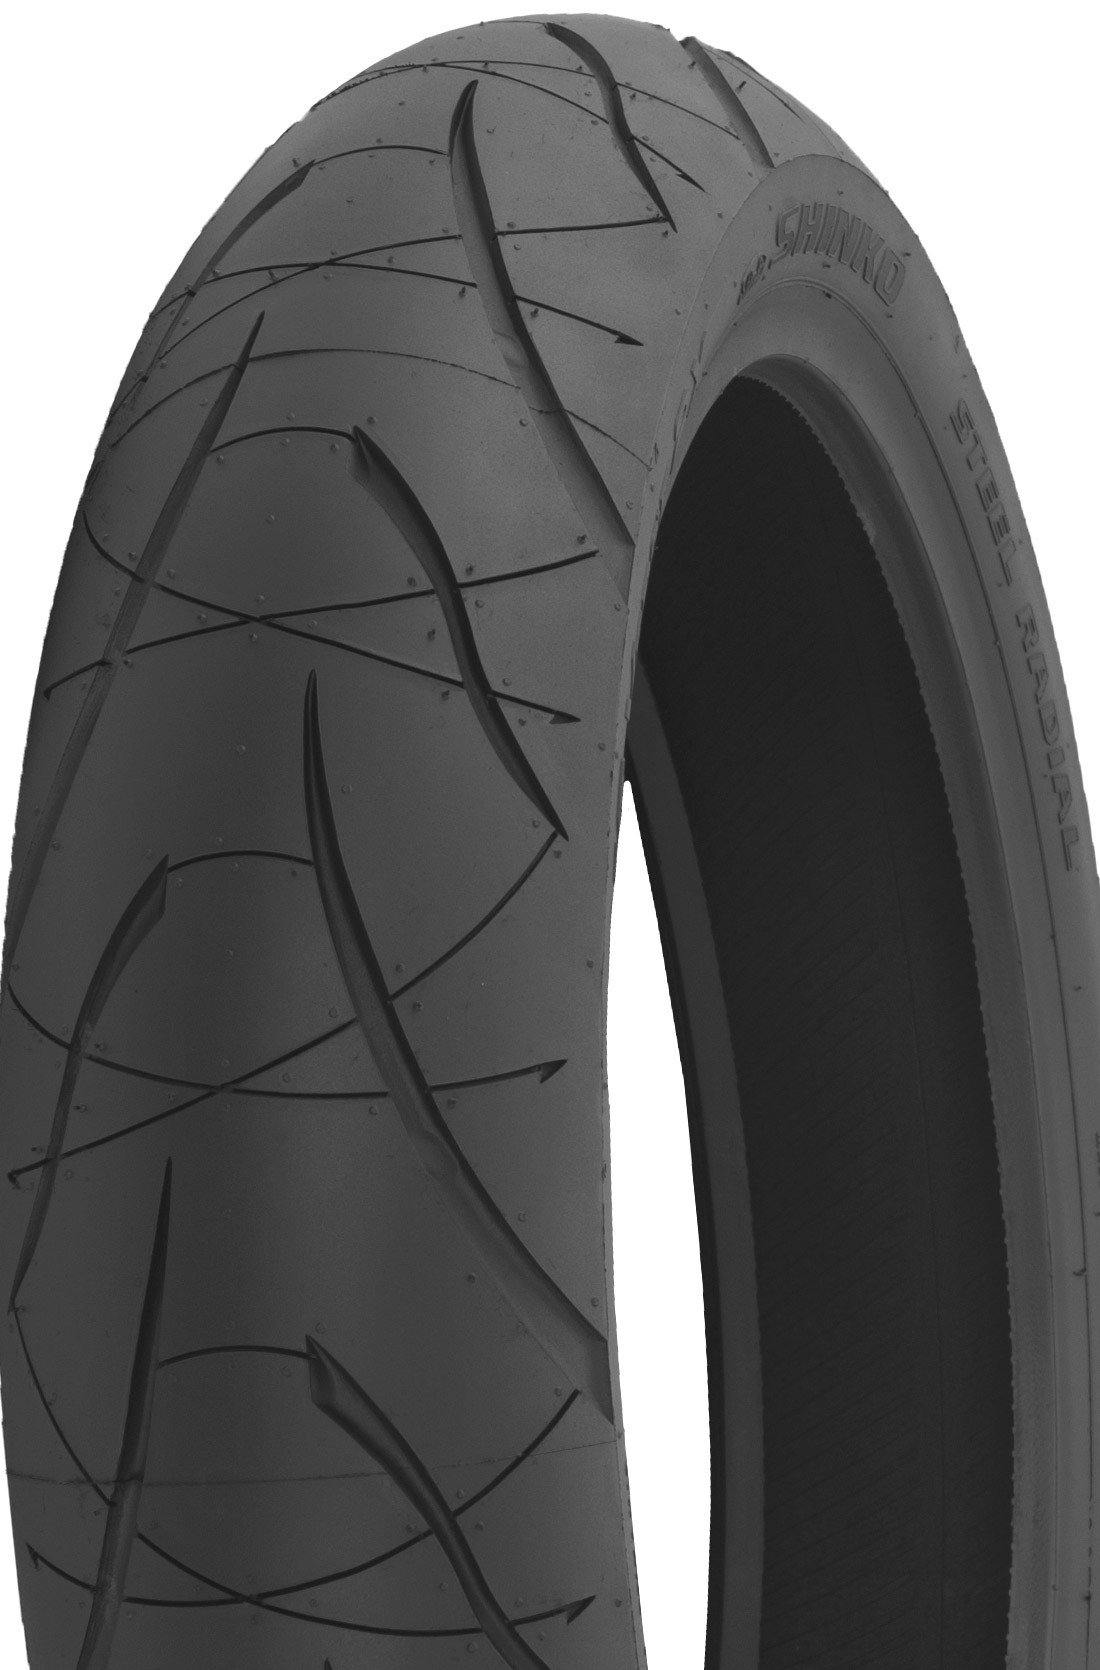 Shinko Tires R016 Series (180/55ZR-17) - Durian Bikers